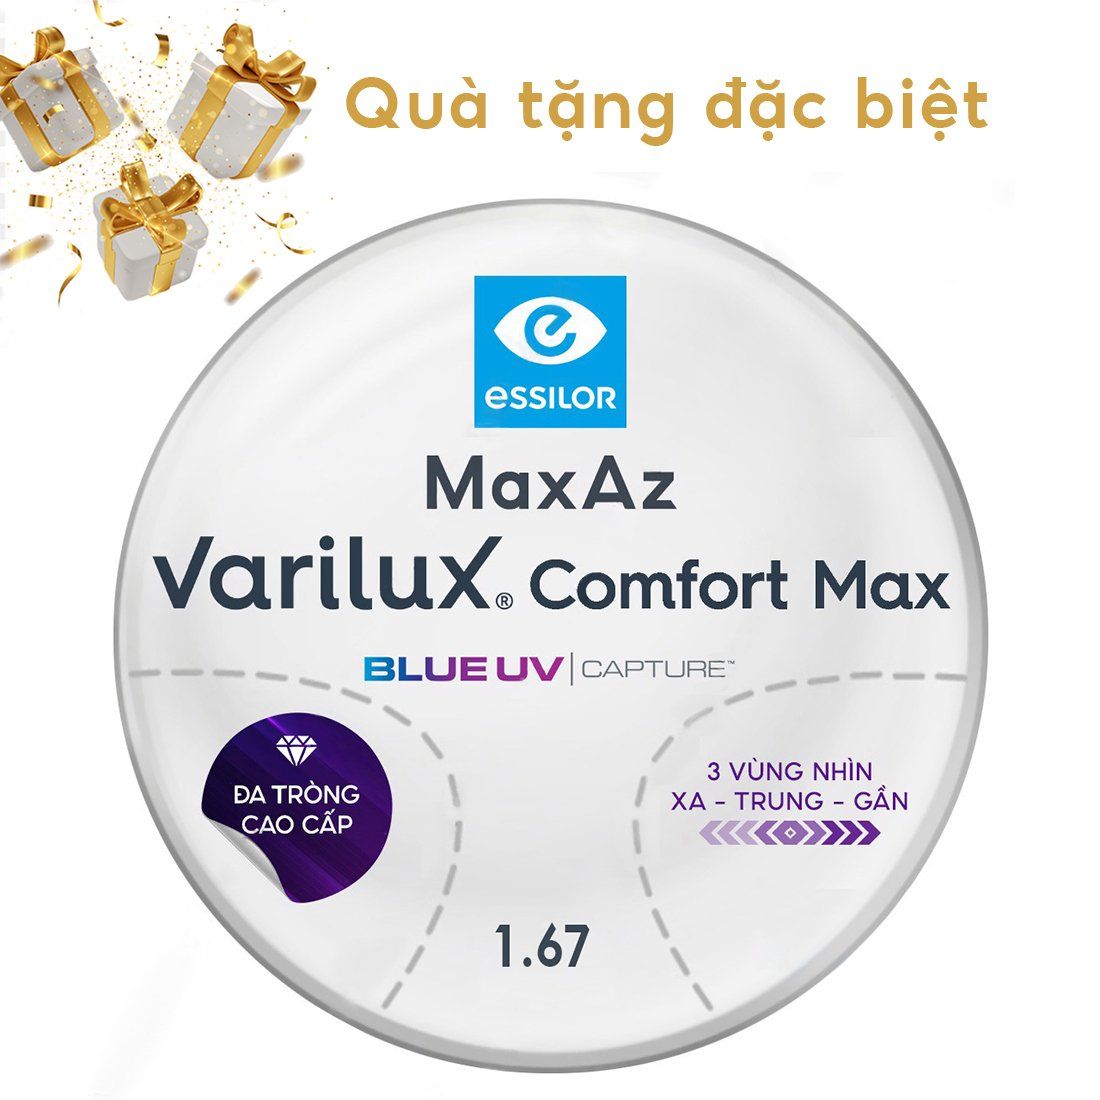  Đa Tròng Cao Cấp Essilor Varilux Comfort Max BlueUV Capture Váng Max Az 